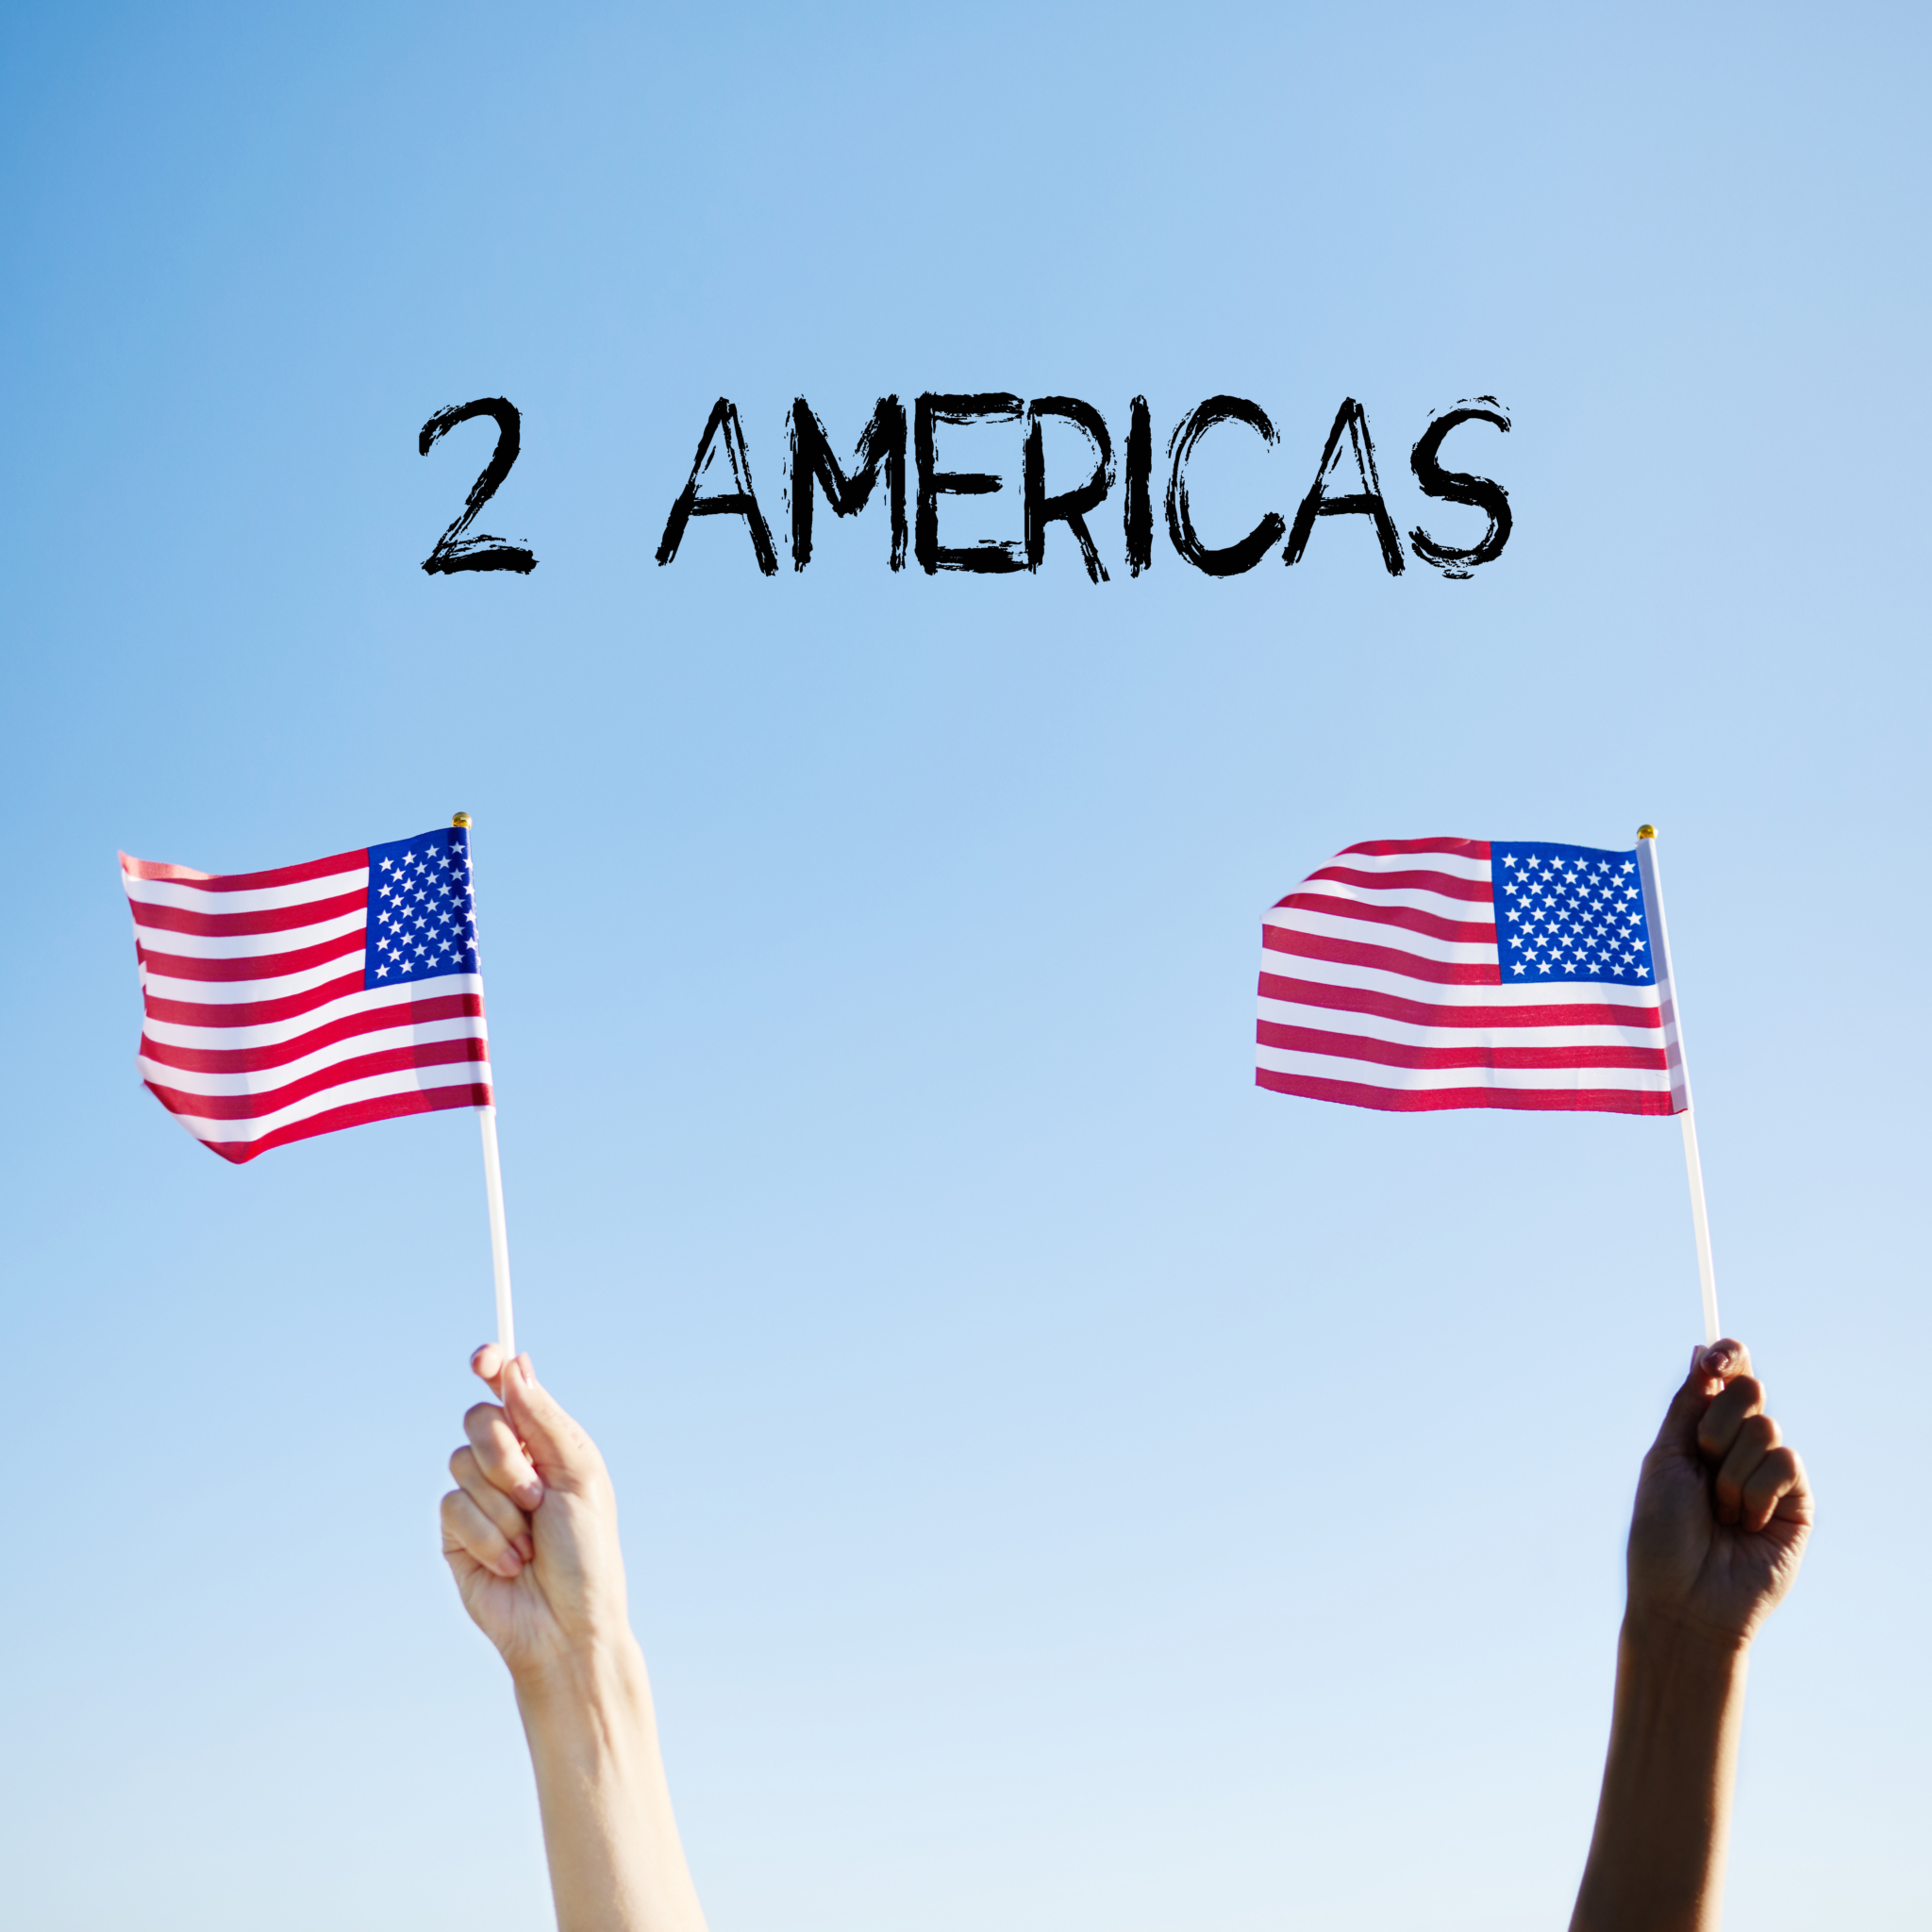 2 Americas